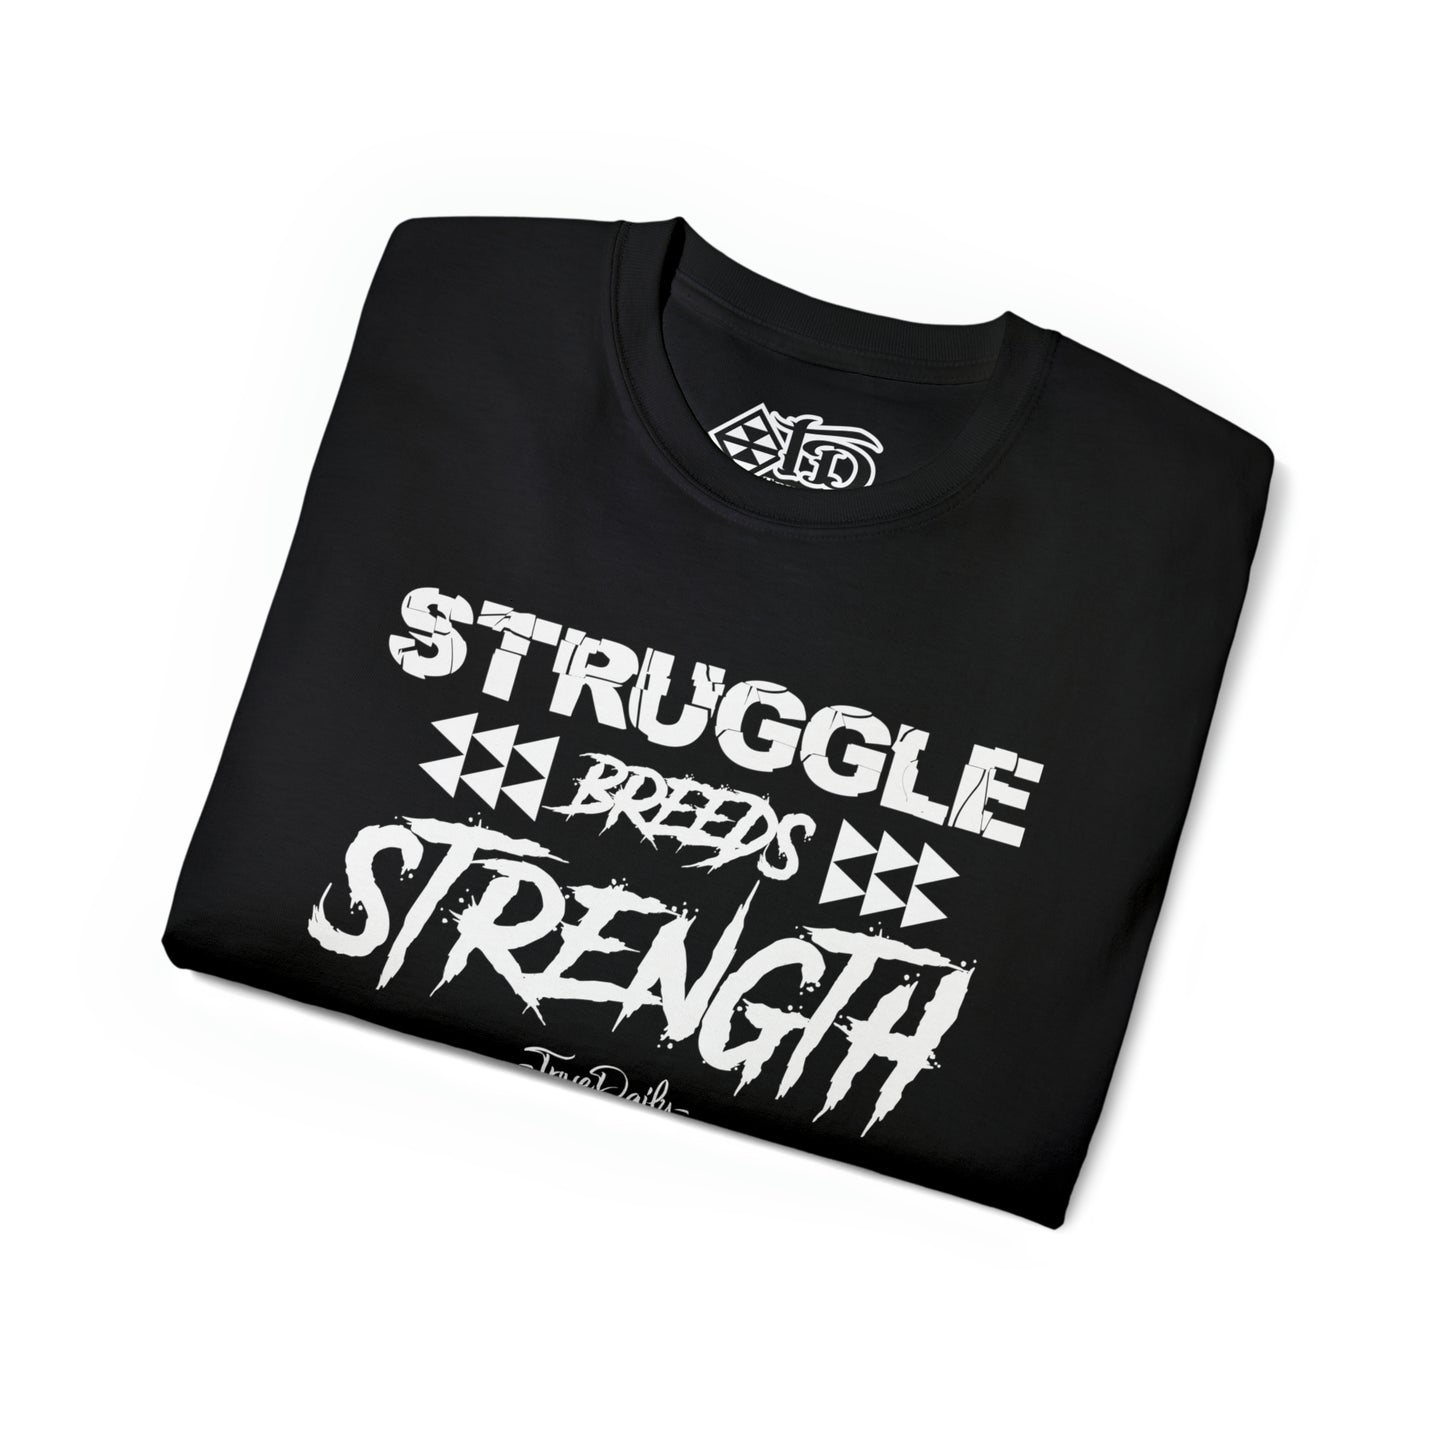 Struggle Breeds Strength - Ultra Cotton Tee